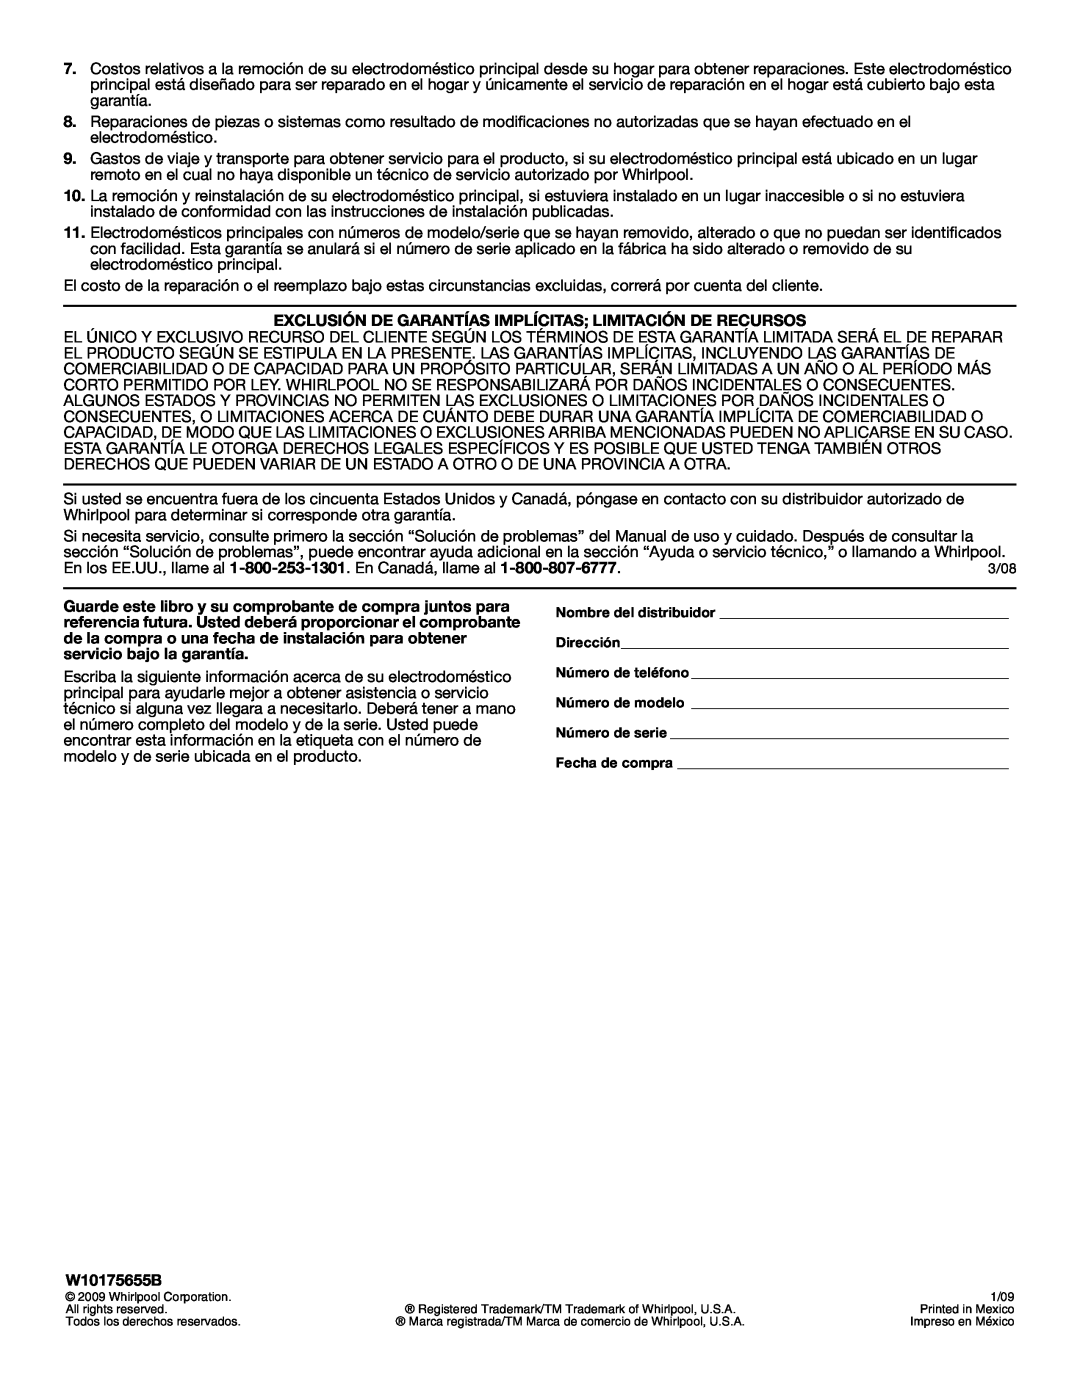 Estate W10175655B manual Exclusión De Garantías Implícitas Limitación De Recursos 